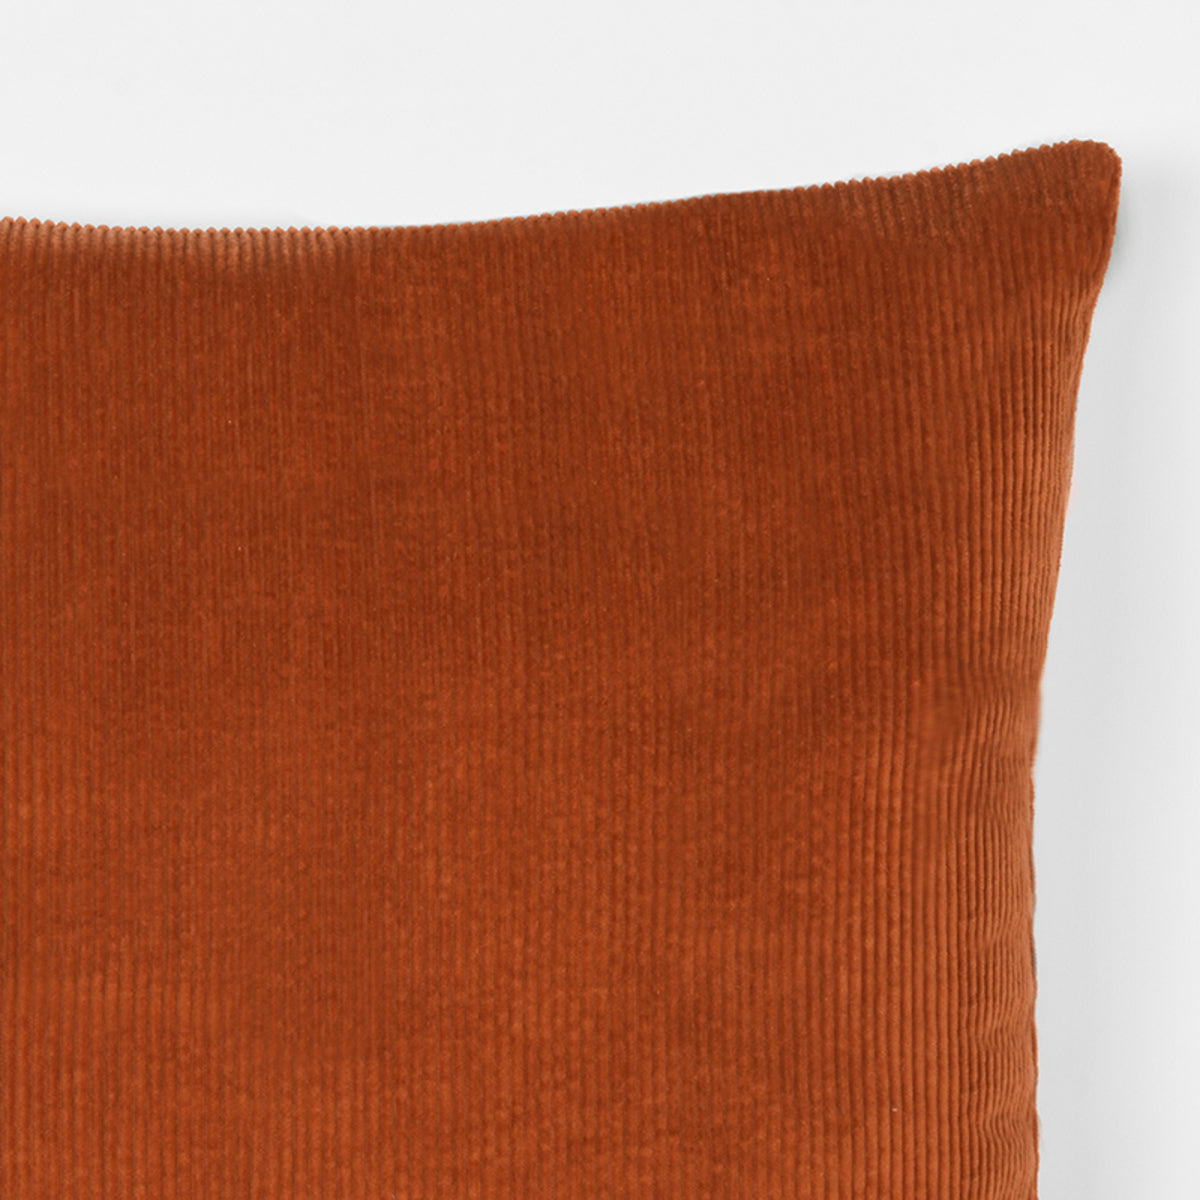 LABEL51 Decorative cushion Rib - Rust - Cotton